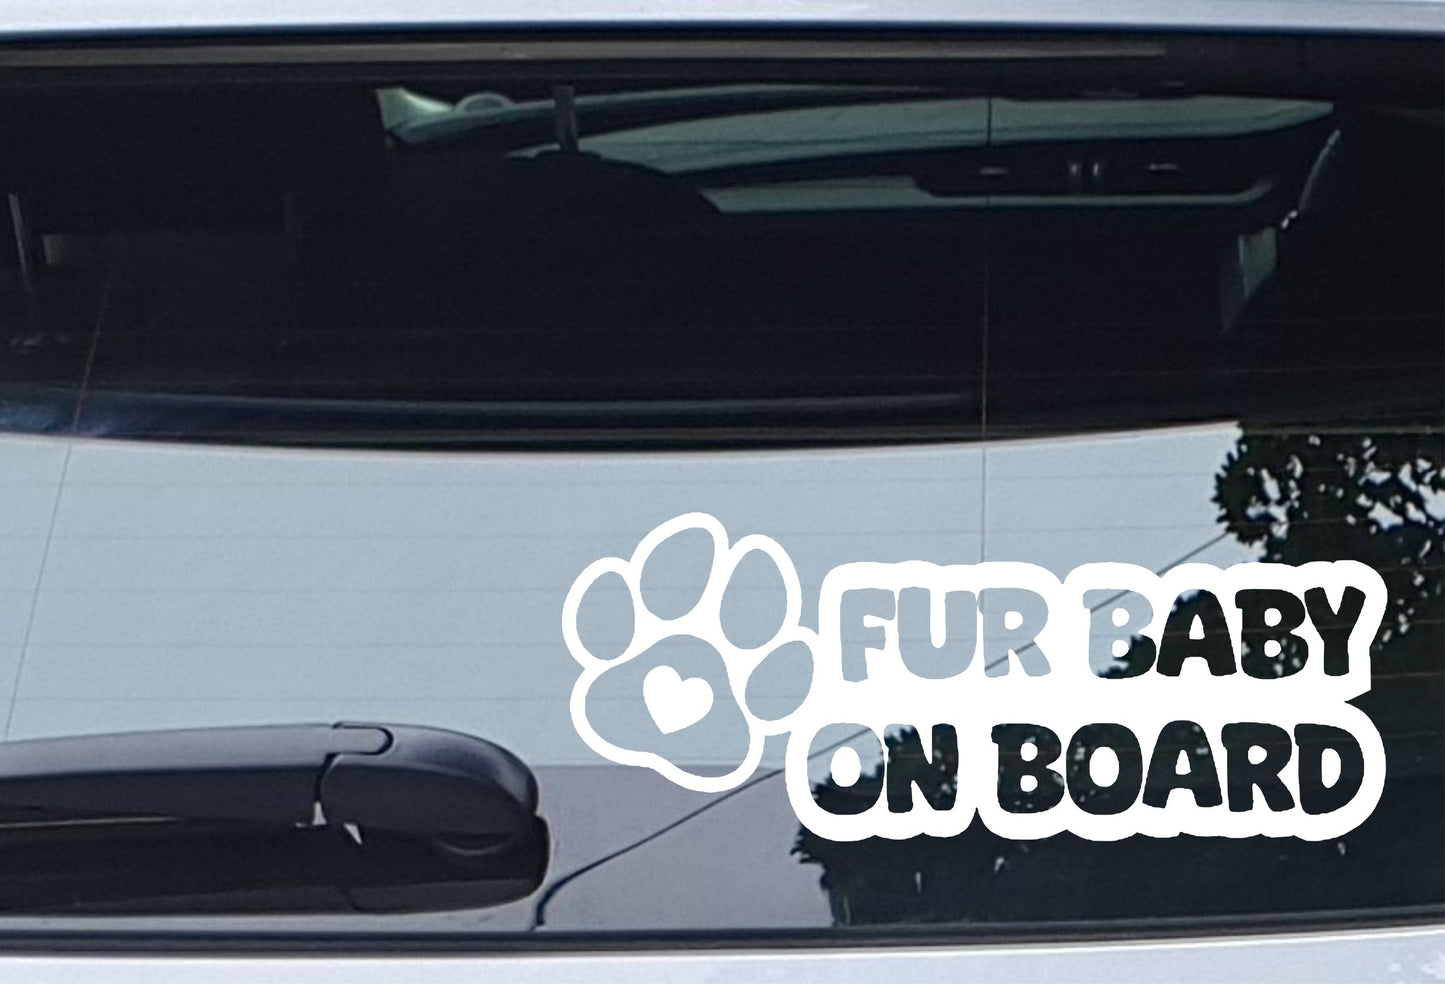 Car Sticker Fur Baby On Board Nice Funny Cute Novelty Dog Window Bumper Boot Decal